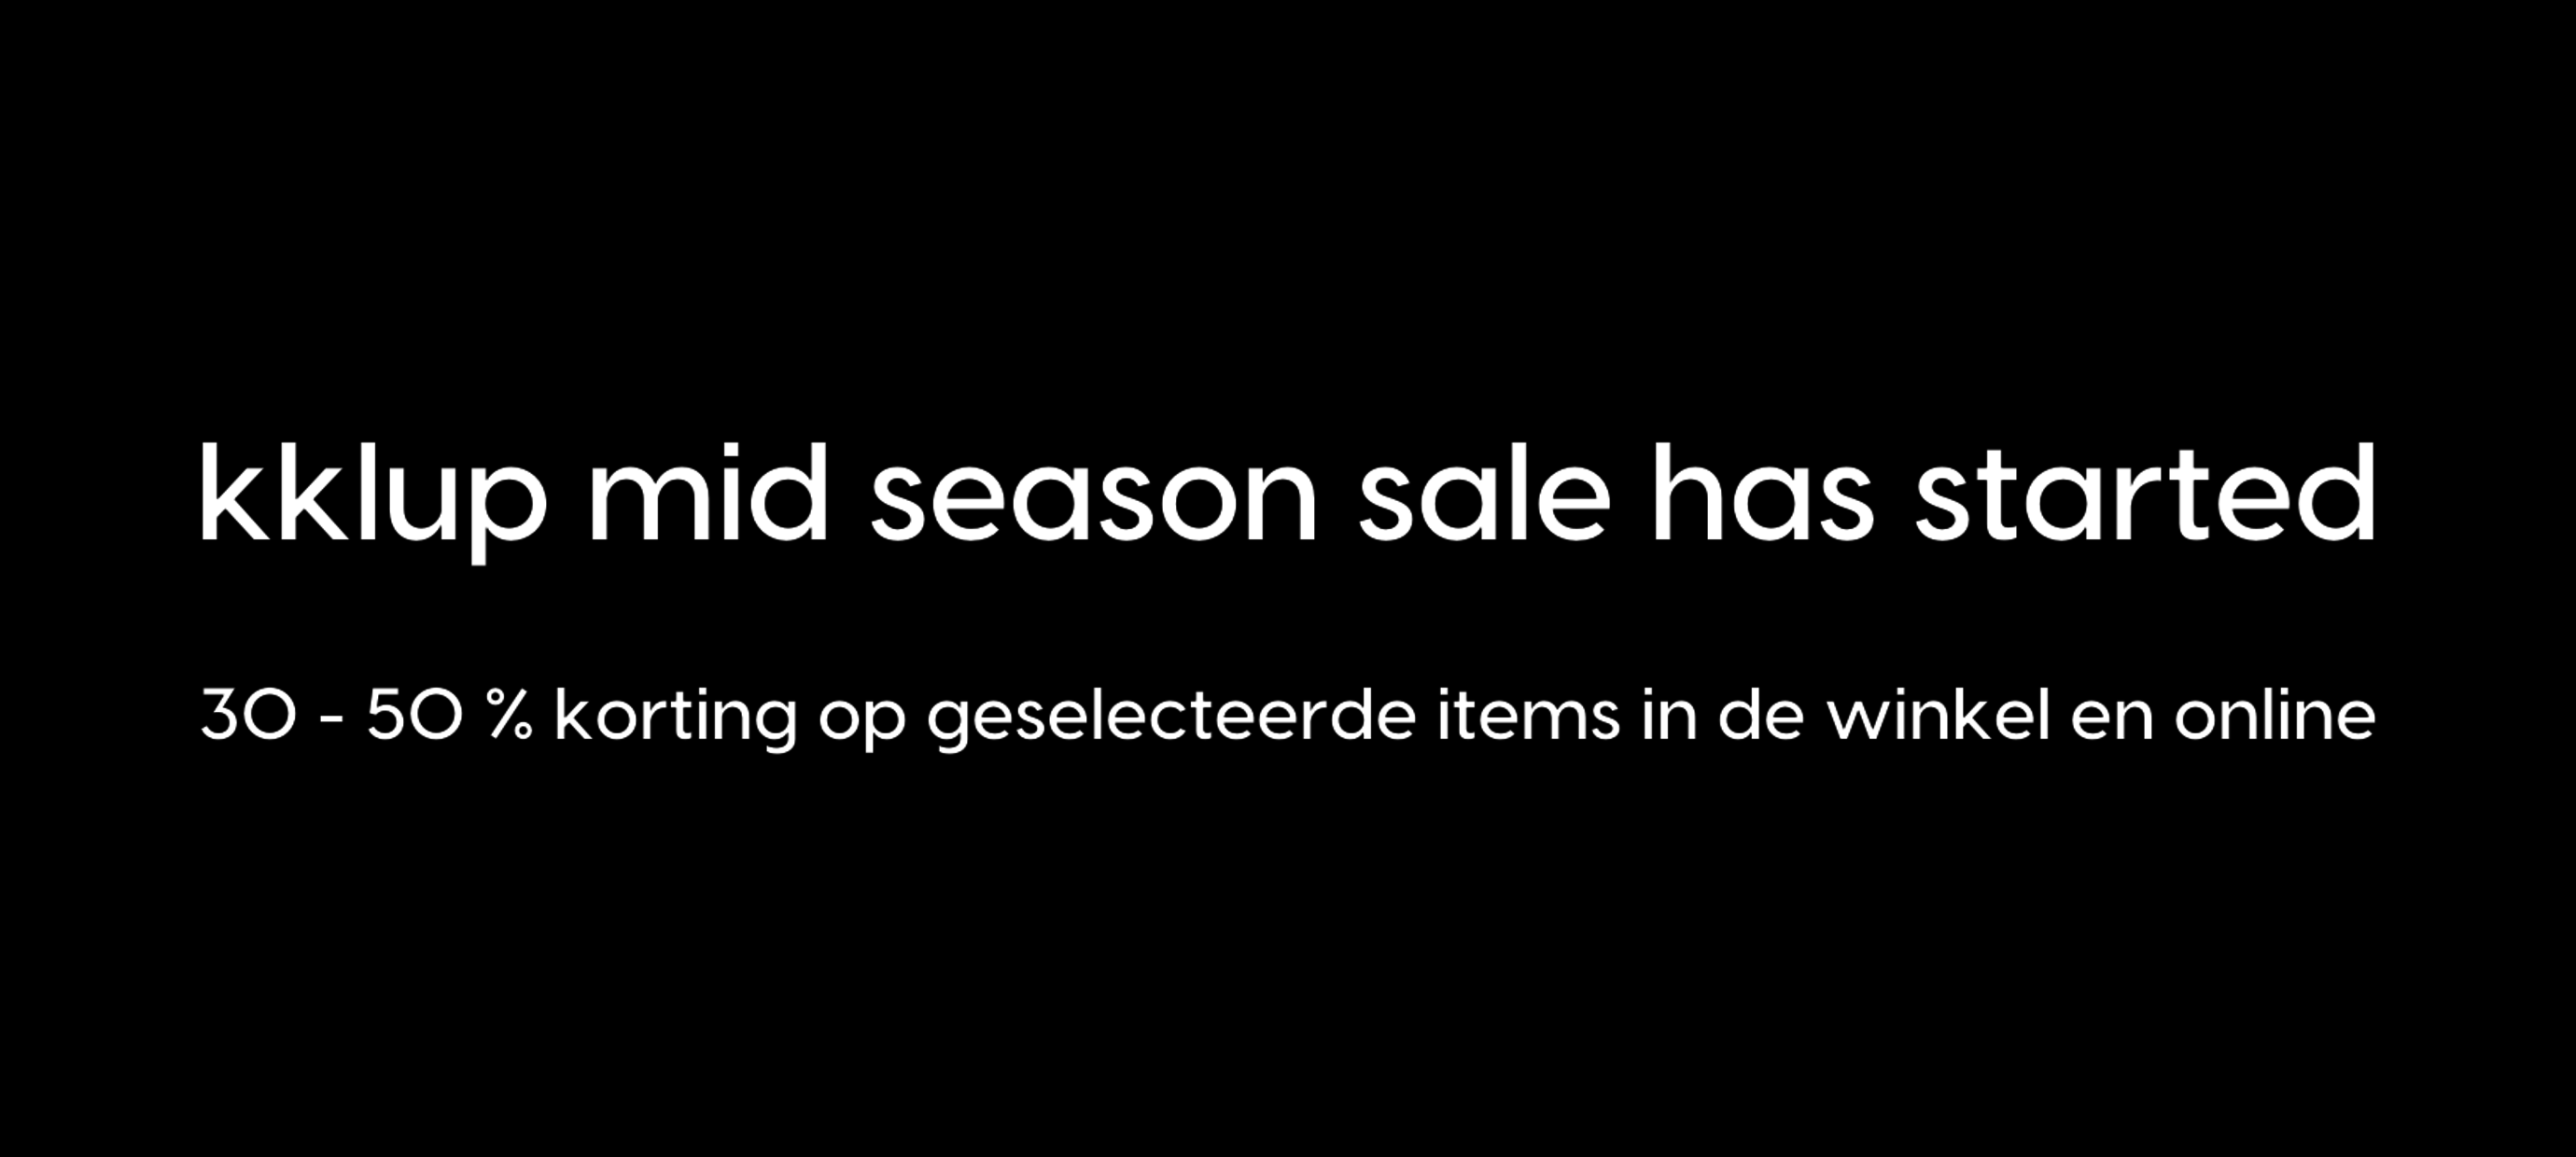 kklup mid season sale has started!